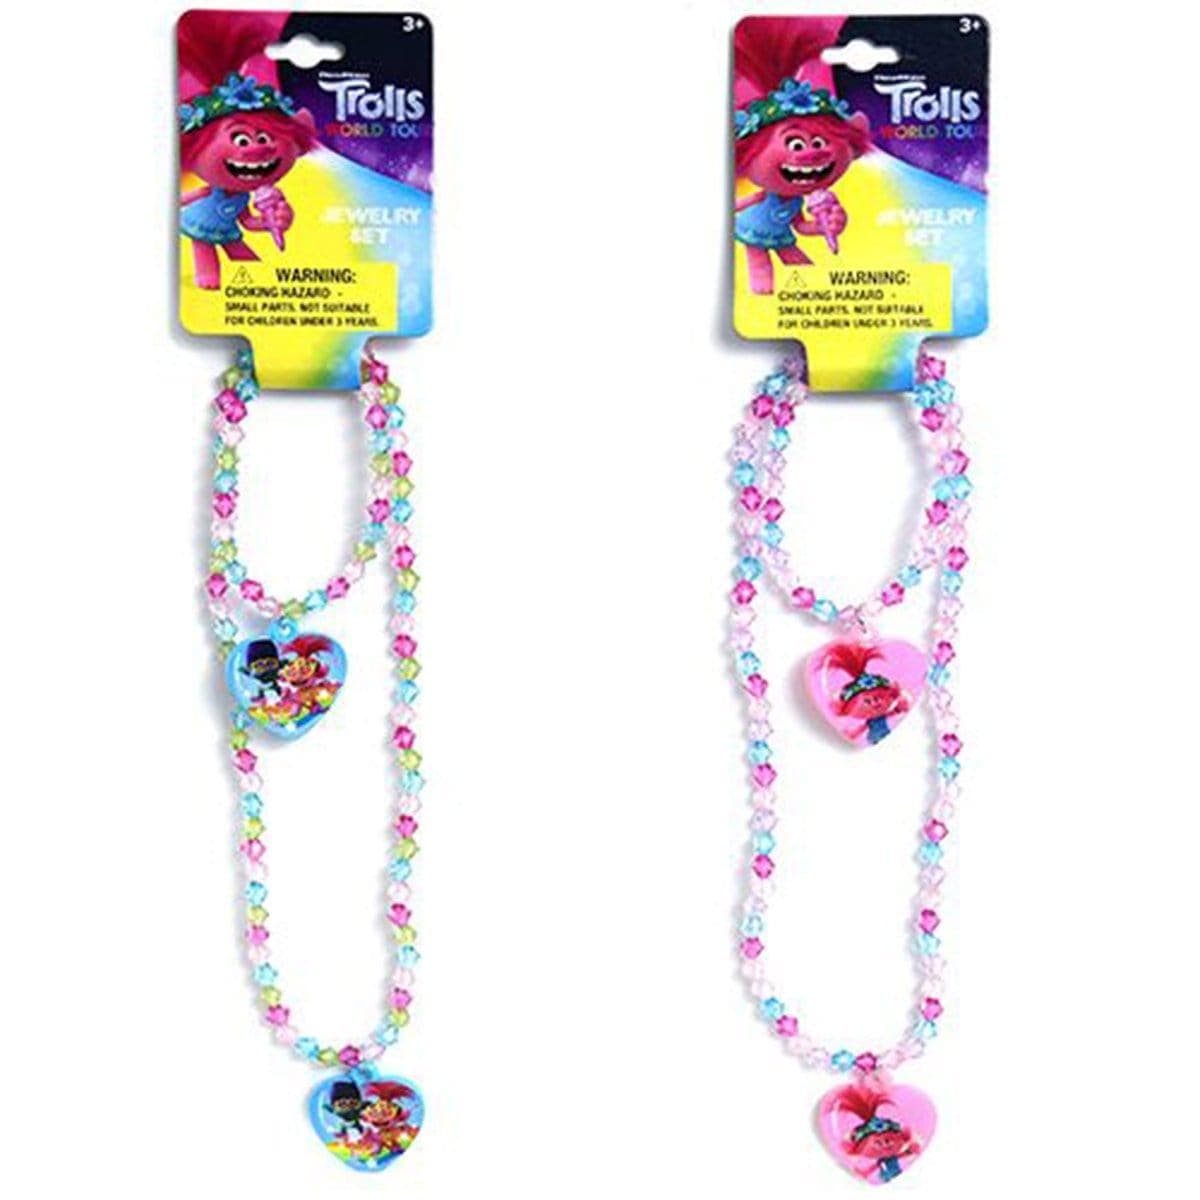 Buy Kids Birthday Trolls World Tour necklace & bracelet set - Assortment sold at Party Expert